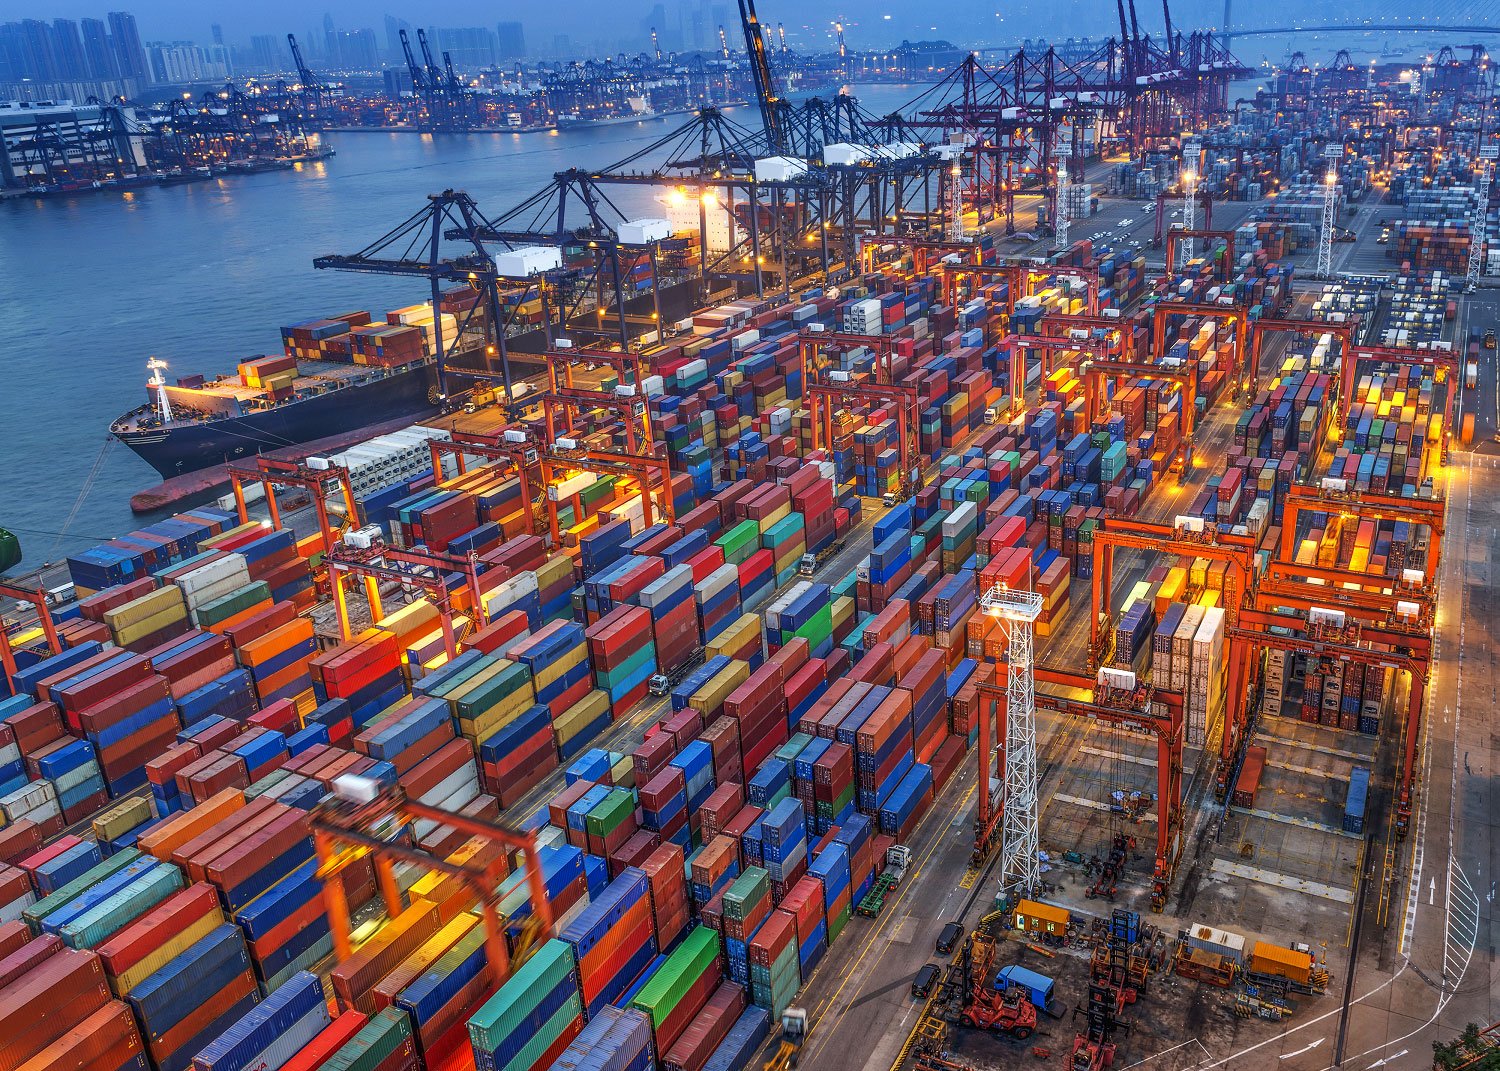 More information about "15 από τα μεγαλύτερα λιμάνια εμπορευματοκιβωτίων βρίσκονται στην Ασία. Στην 4η θέση των liners η Cosco"